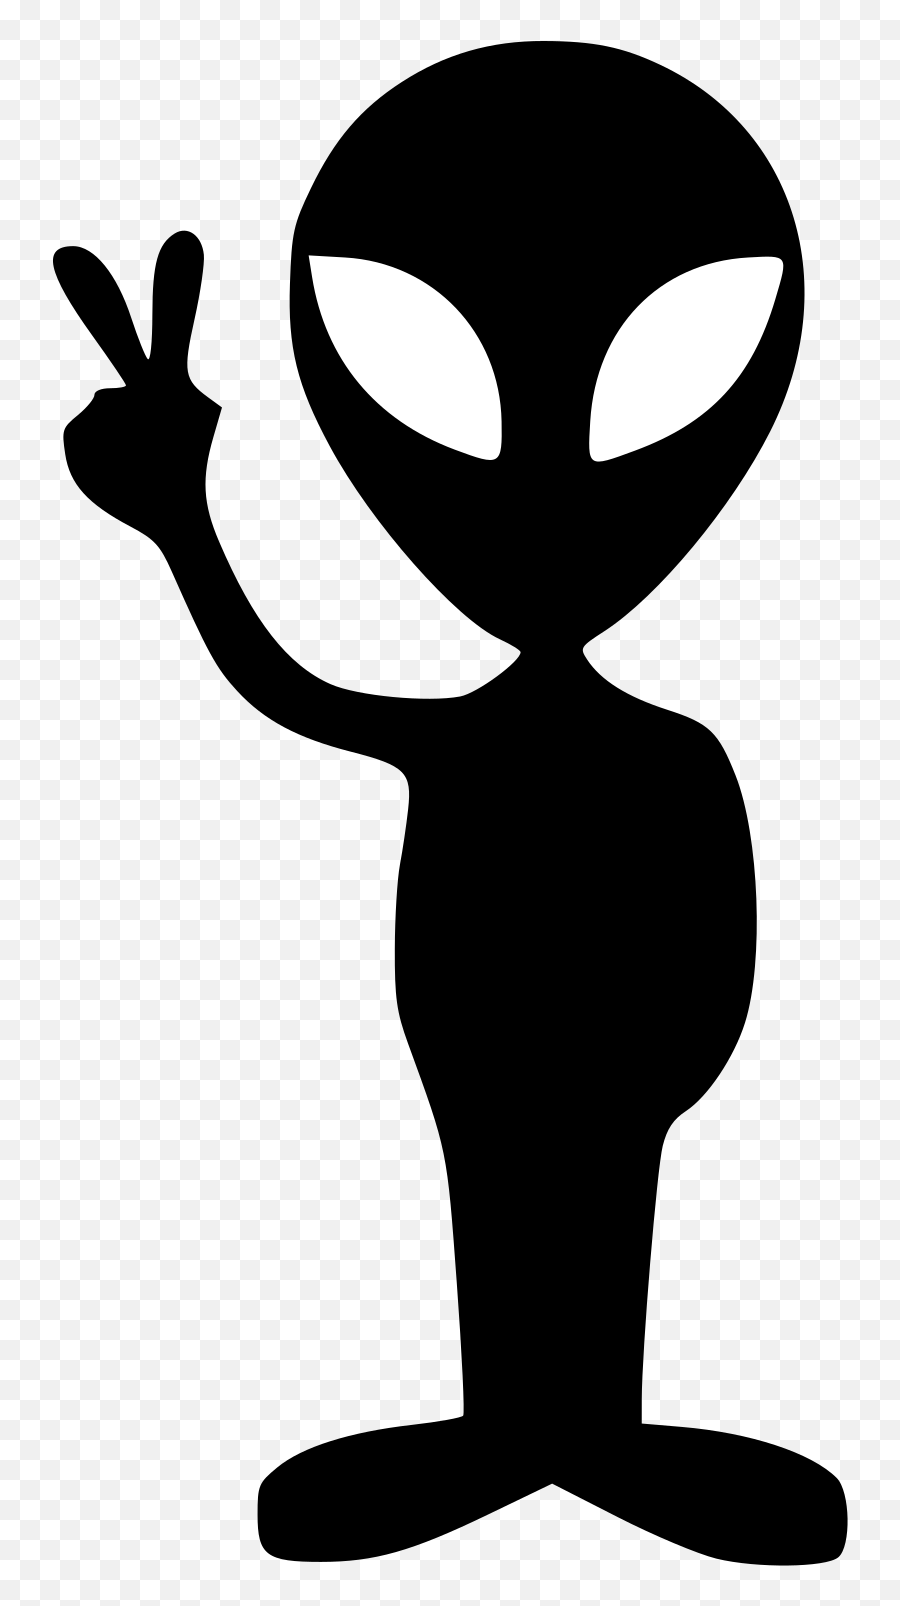 Imagesvg Xml - Alien Giving Peace Sign Clipart Full Size Area 51 Alien Cartoon Emoji,Peace Emoticon